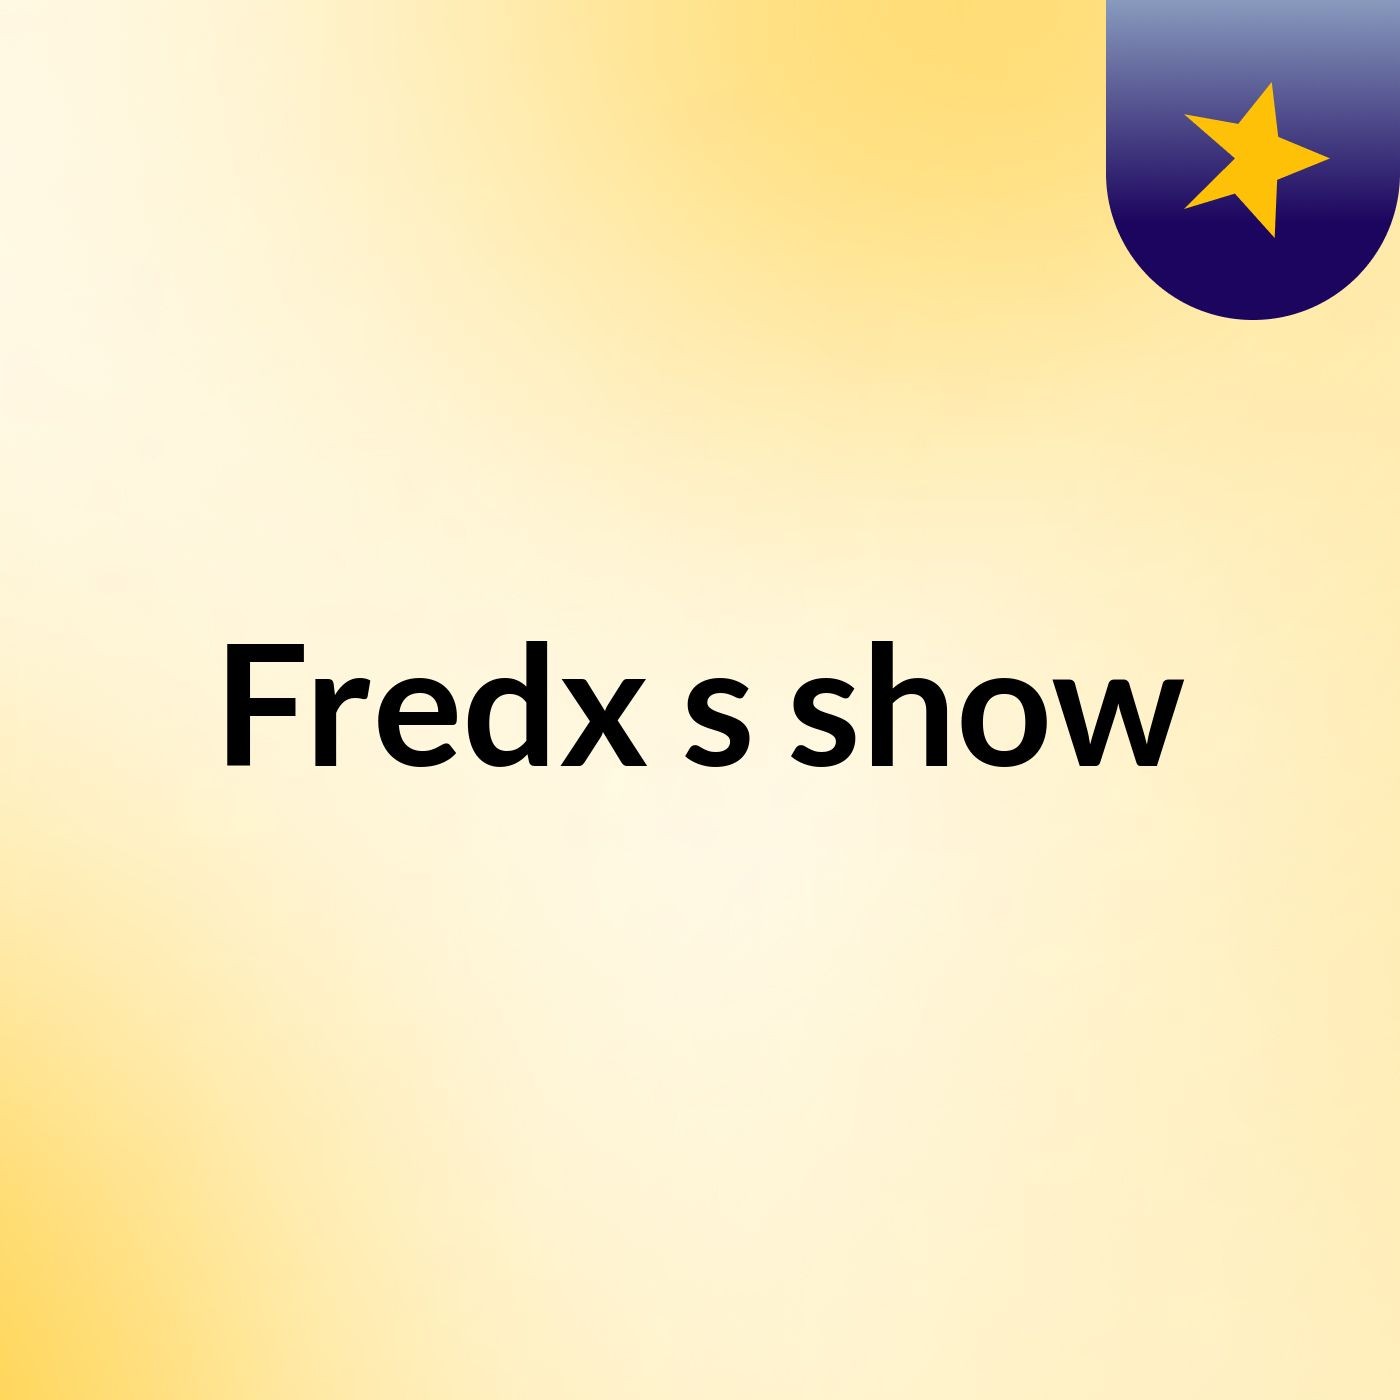 Fredx's show